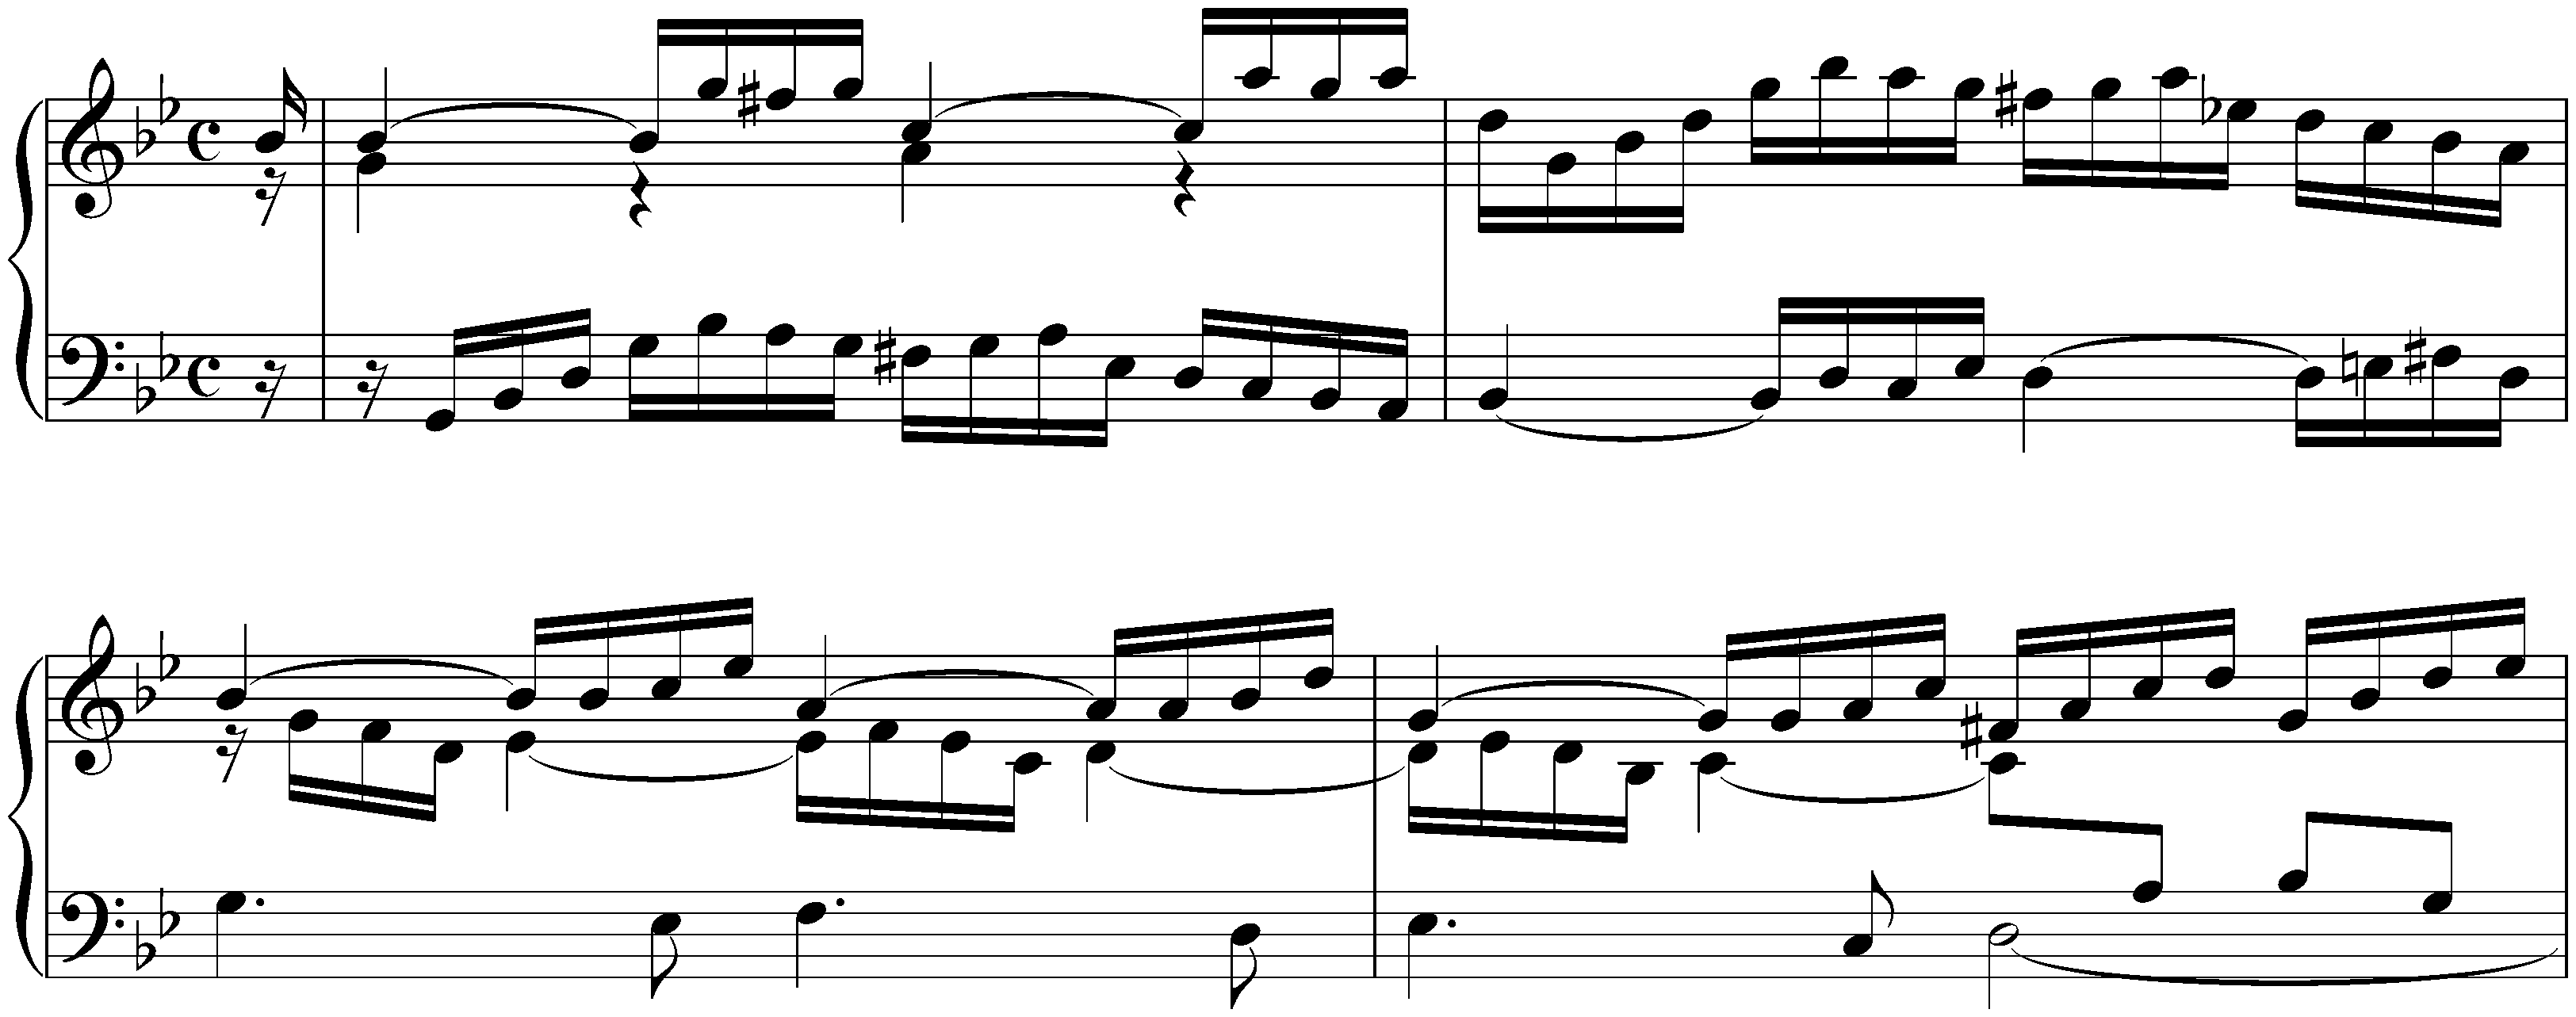 English Suite no. 3 in G minor, BWV 808; 2. Allemande